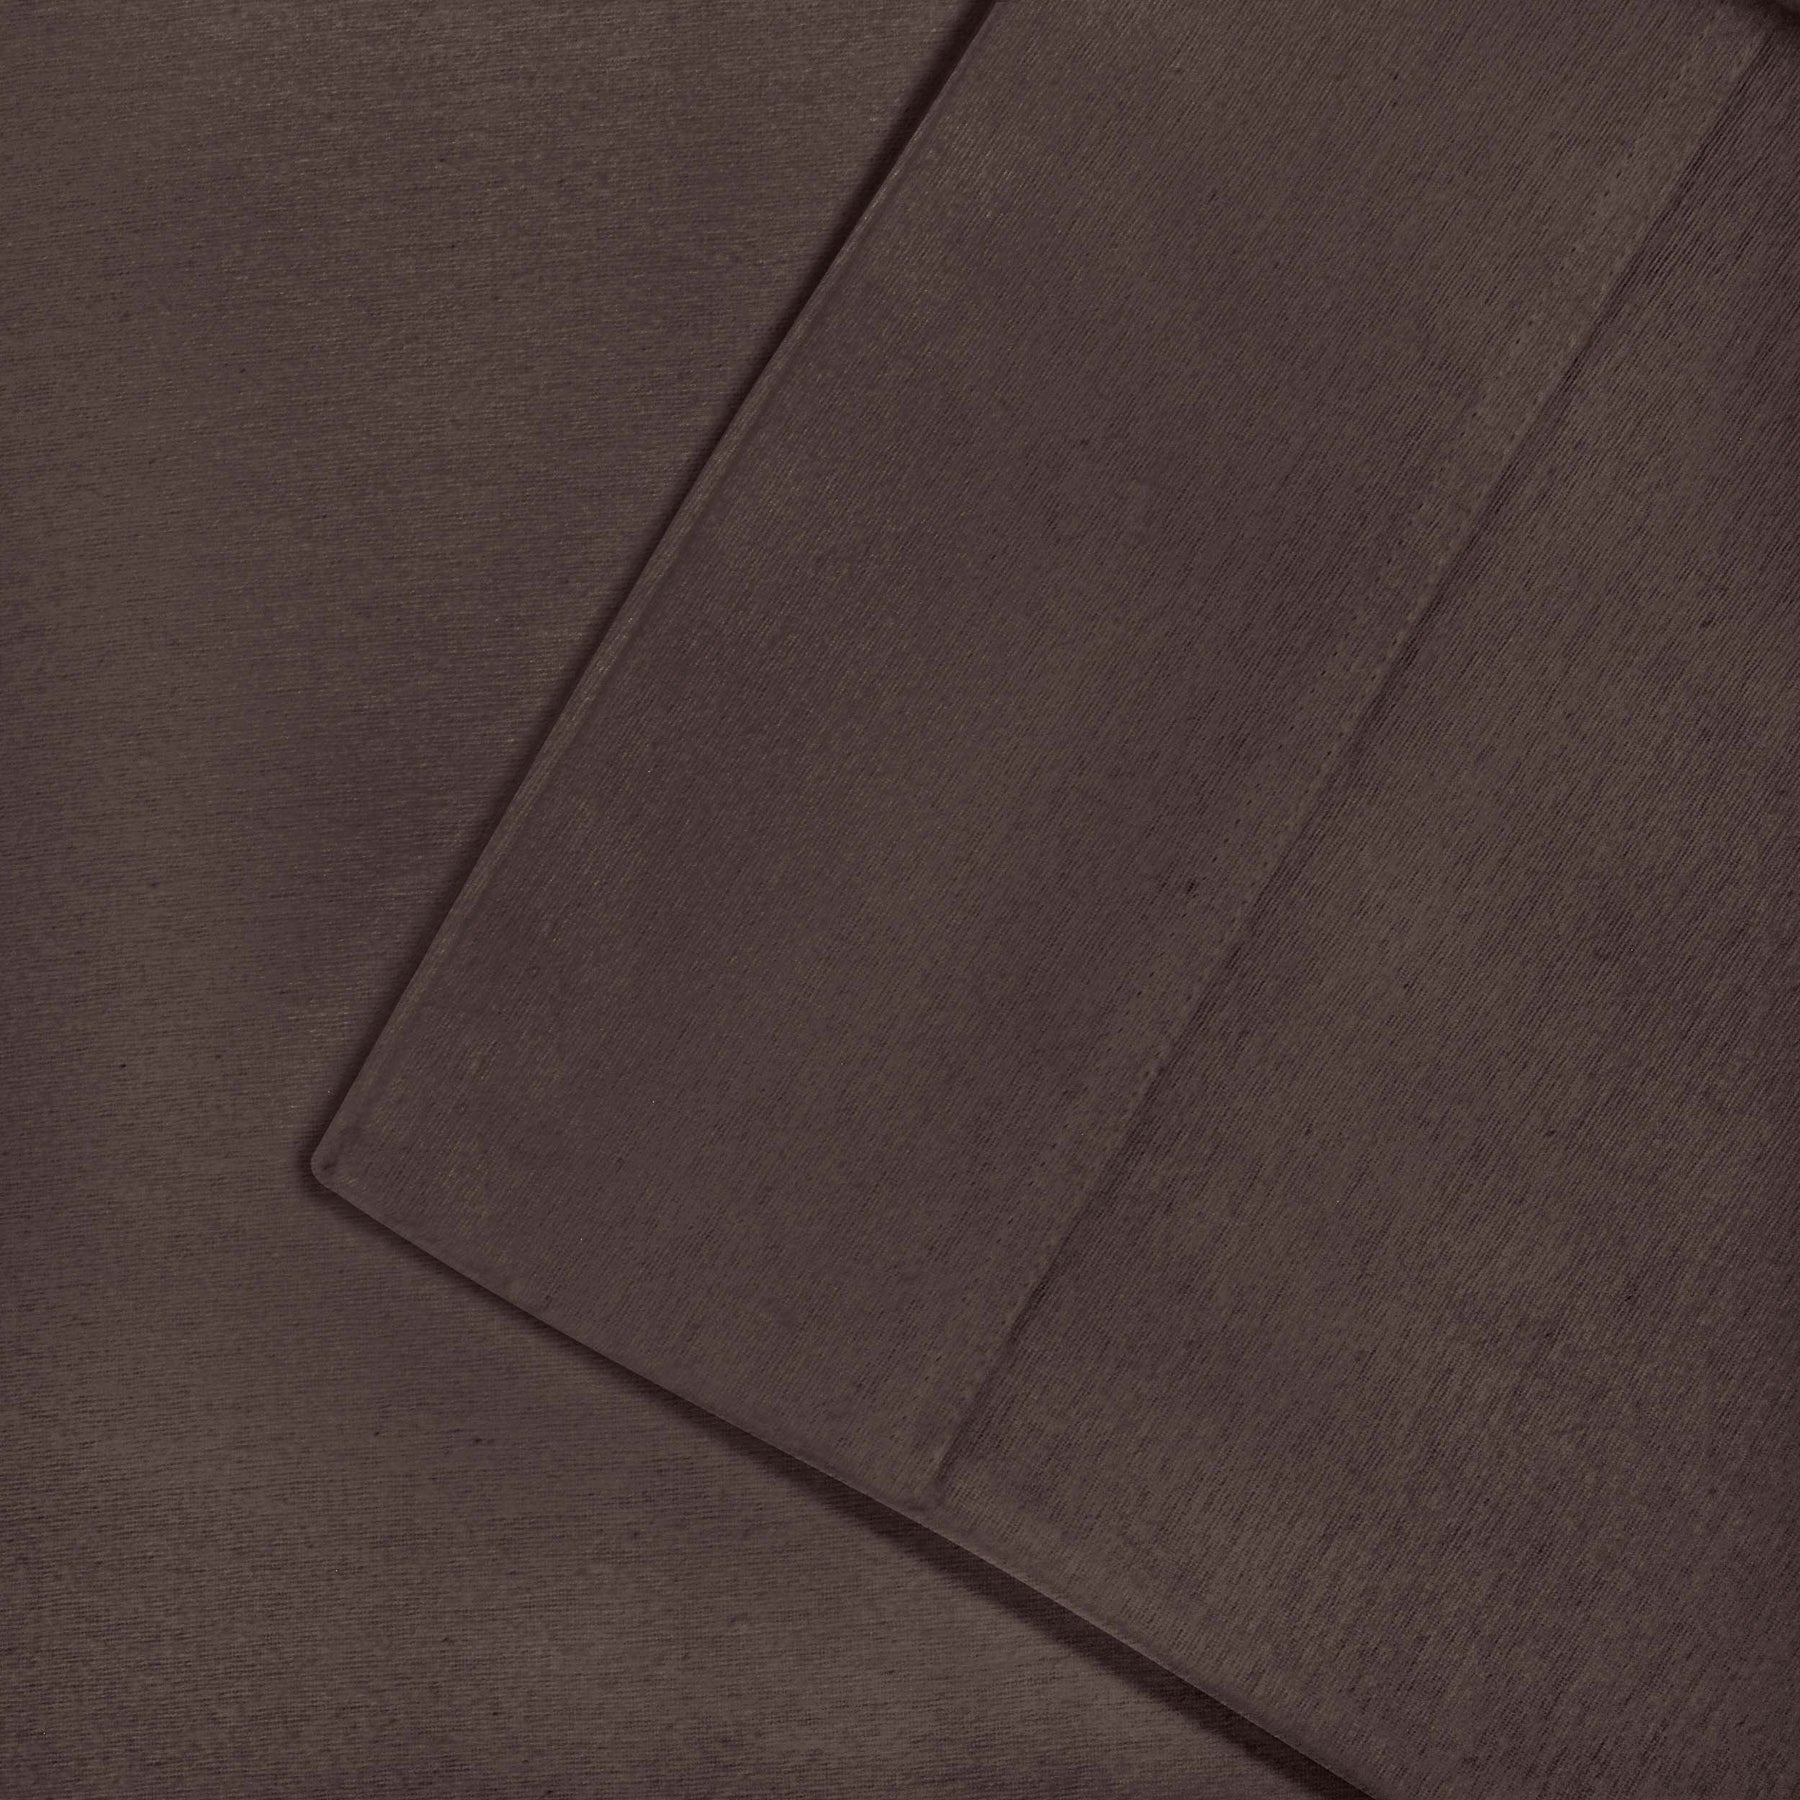 Solid Flannel Cotton Soft Warm Deep Pocket Sheet Set - Charcoal